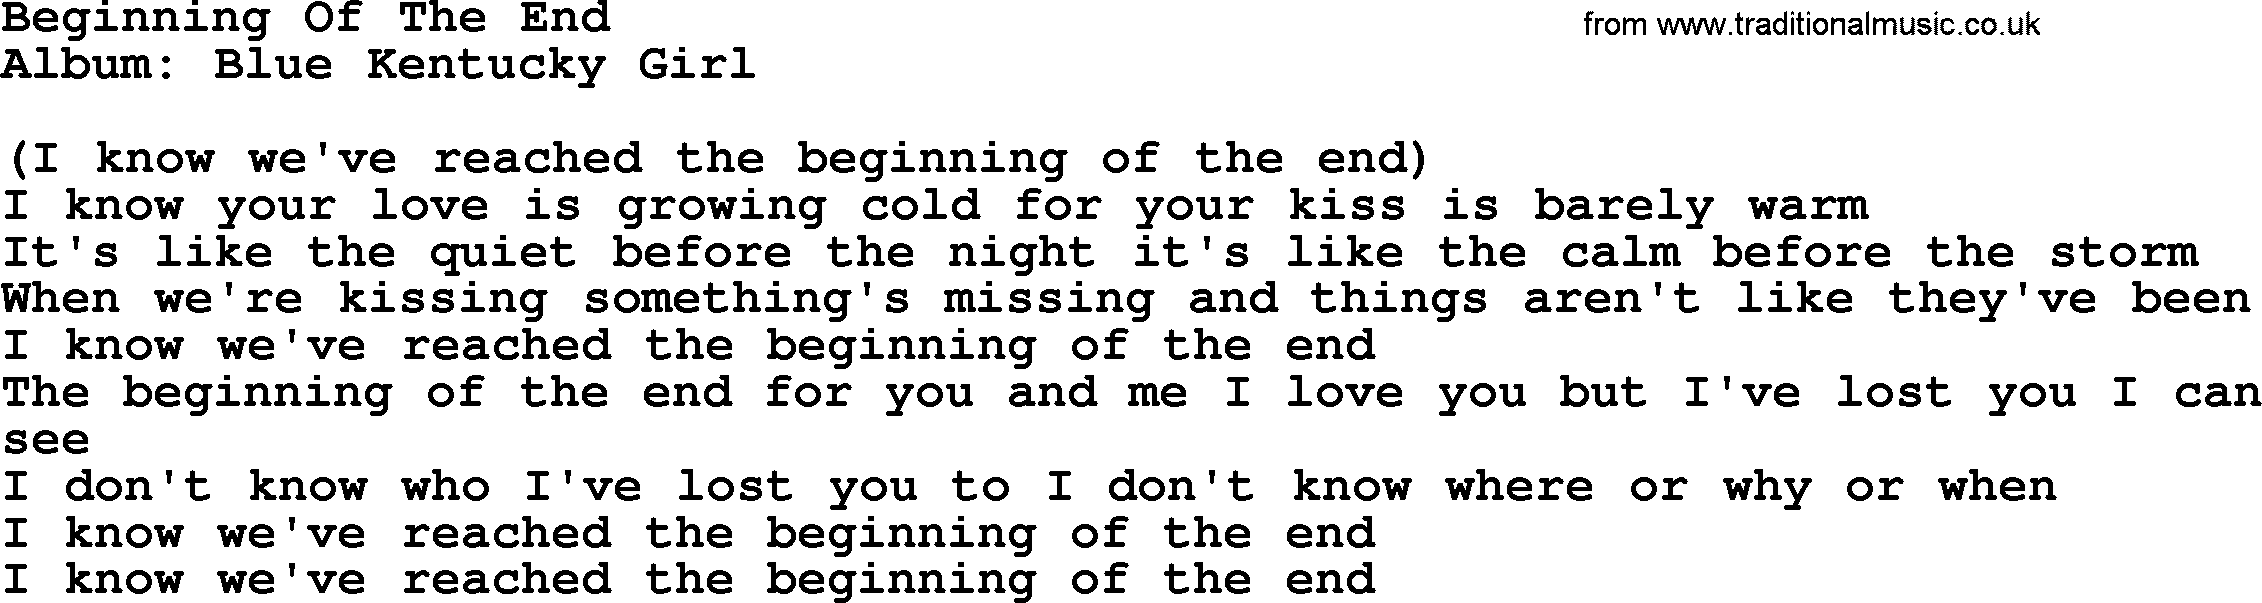 Loretta Lynn song: Beginning Of The End lyrics